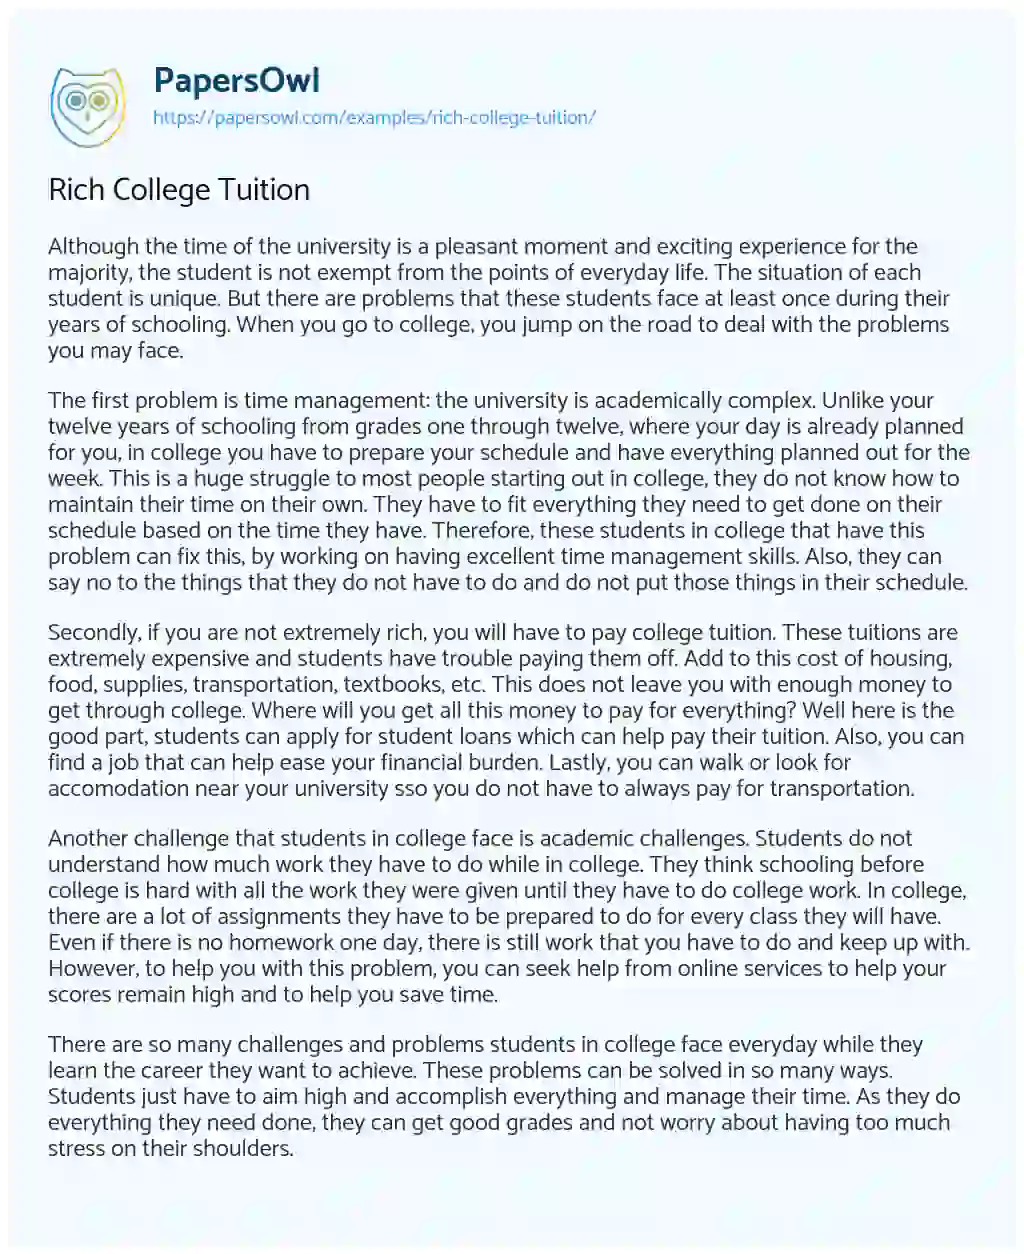 Rich College Tuition essay